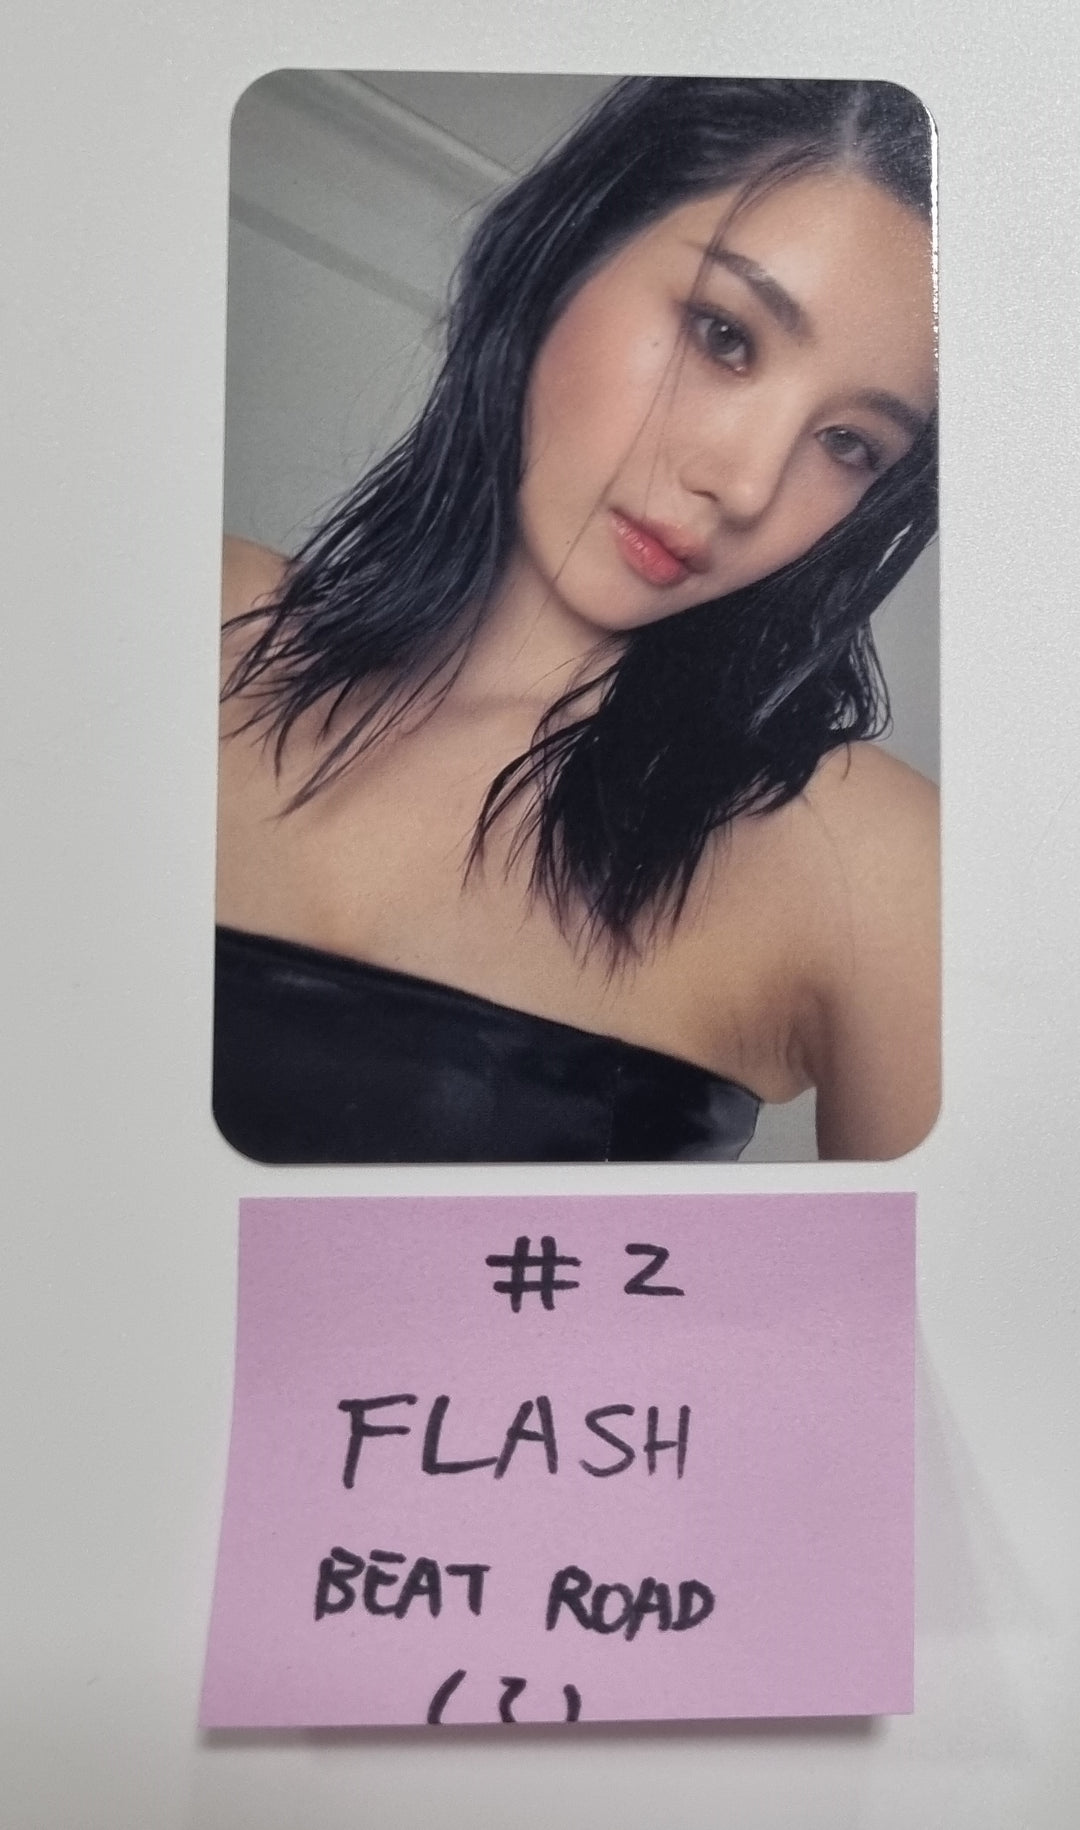 Kwon Eunbi 1st single "The Flash" - Beatroad Fansign Event Photocard [23.10.19]